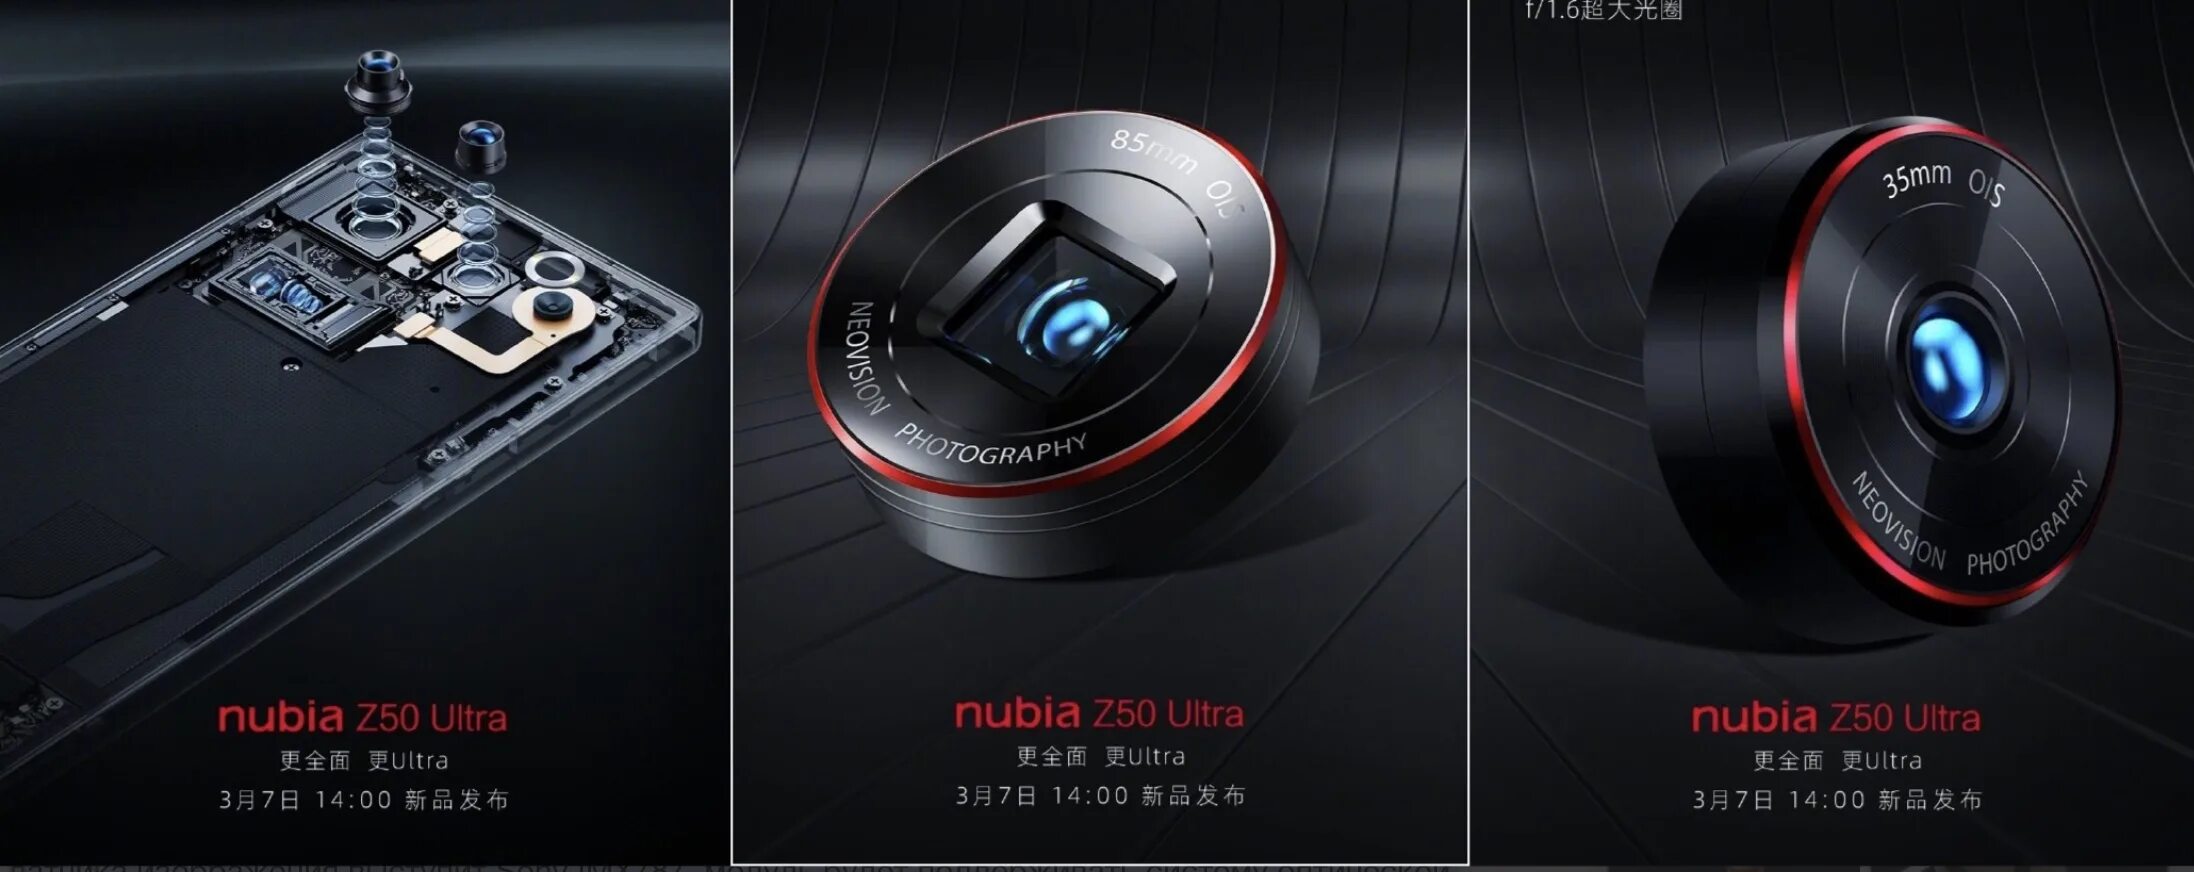 Zte nubia z50s pro. ZTE Nubia z50 Ultra. Nubia смартфон z60 Ultra. Камера смартфона 50 МП. Nubia z60 Ultra фирменный чехол.